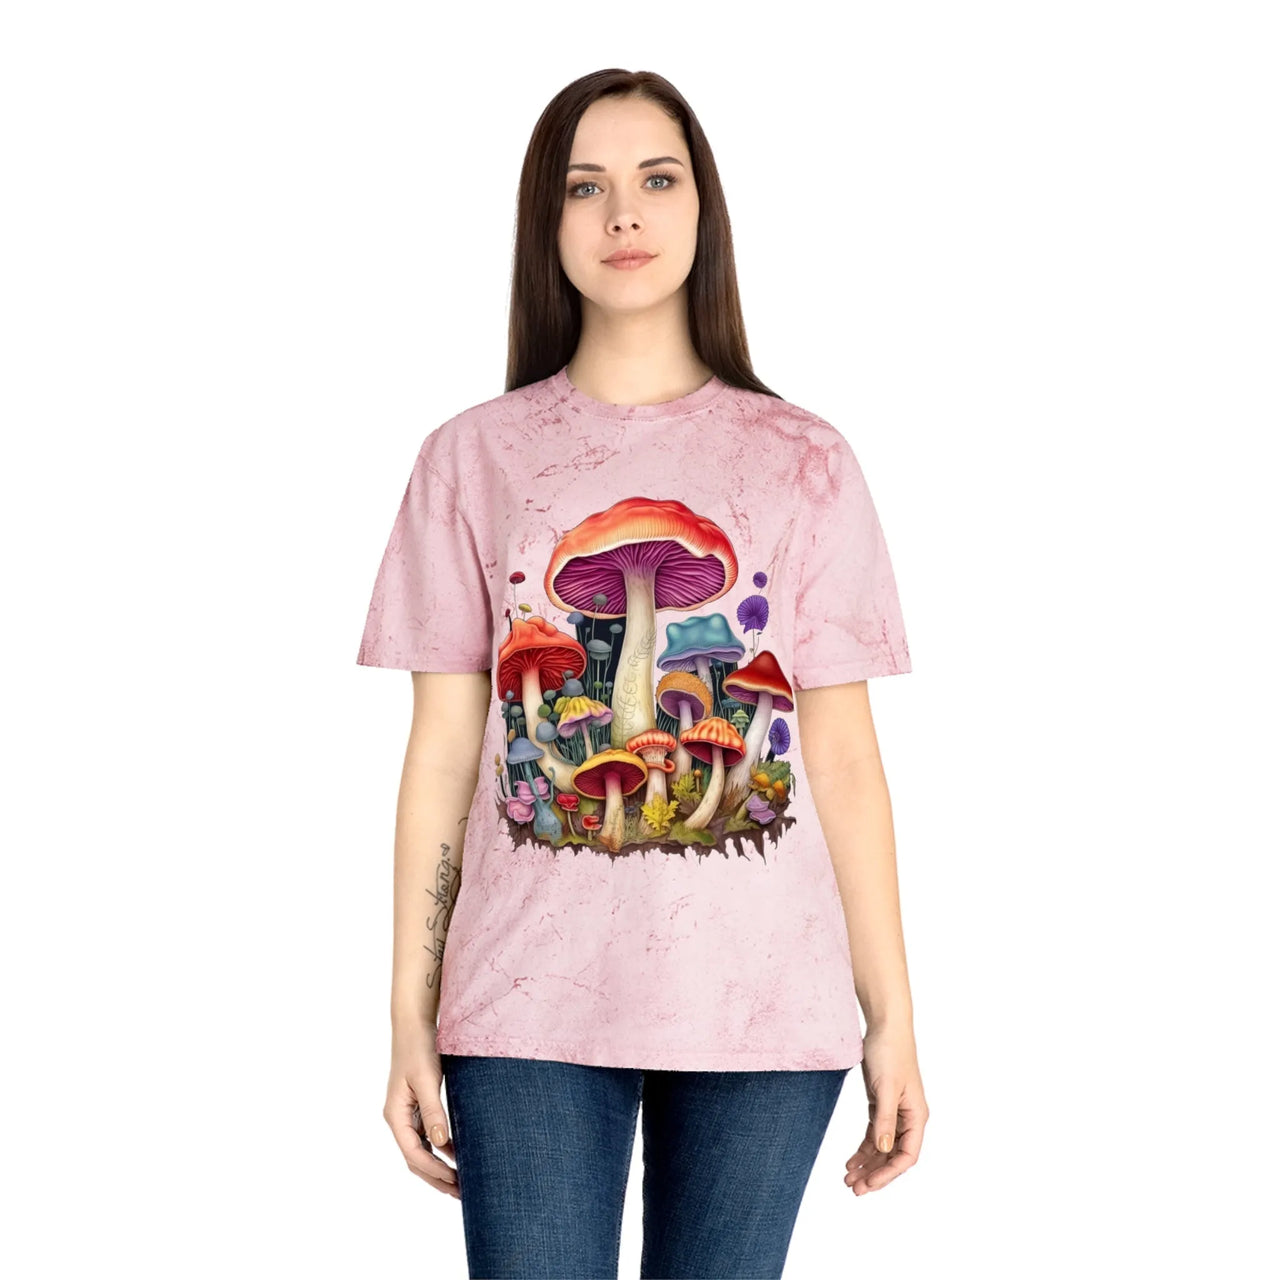 Mushroom Color Blast T-Shirt - Express Your Free Spirit - GroovyGallery